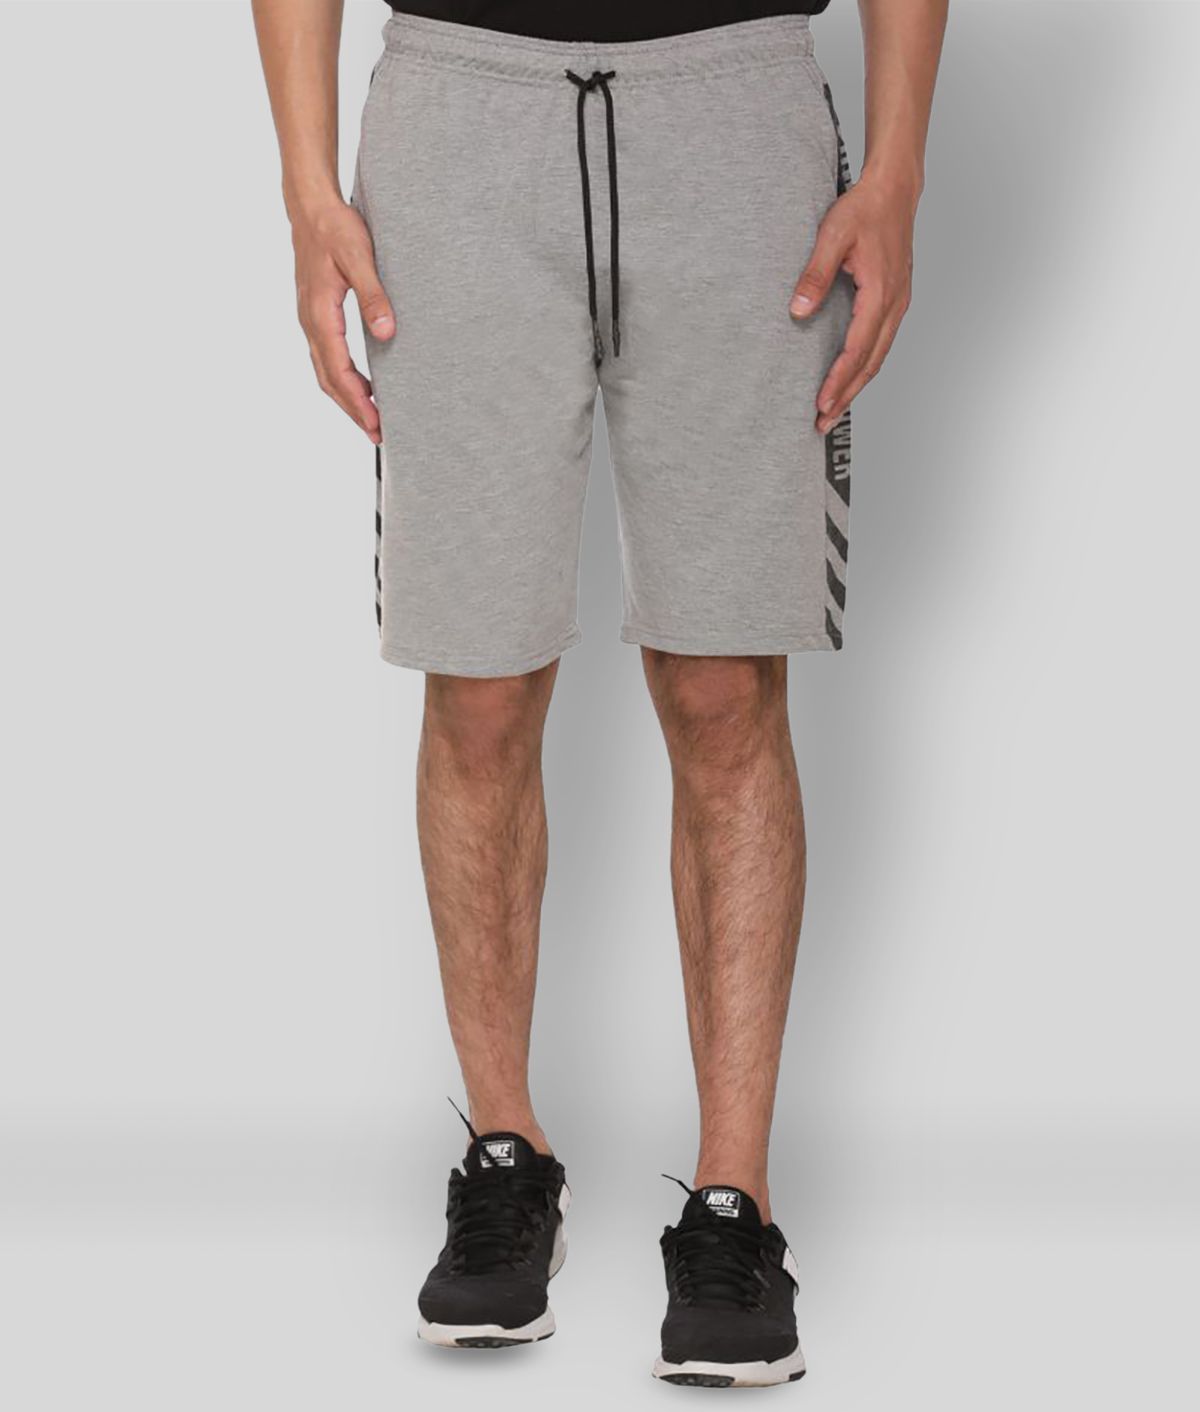     			HVBK - Grey Cotton Blend Men's Shorts ( Pack of 1 )